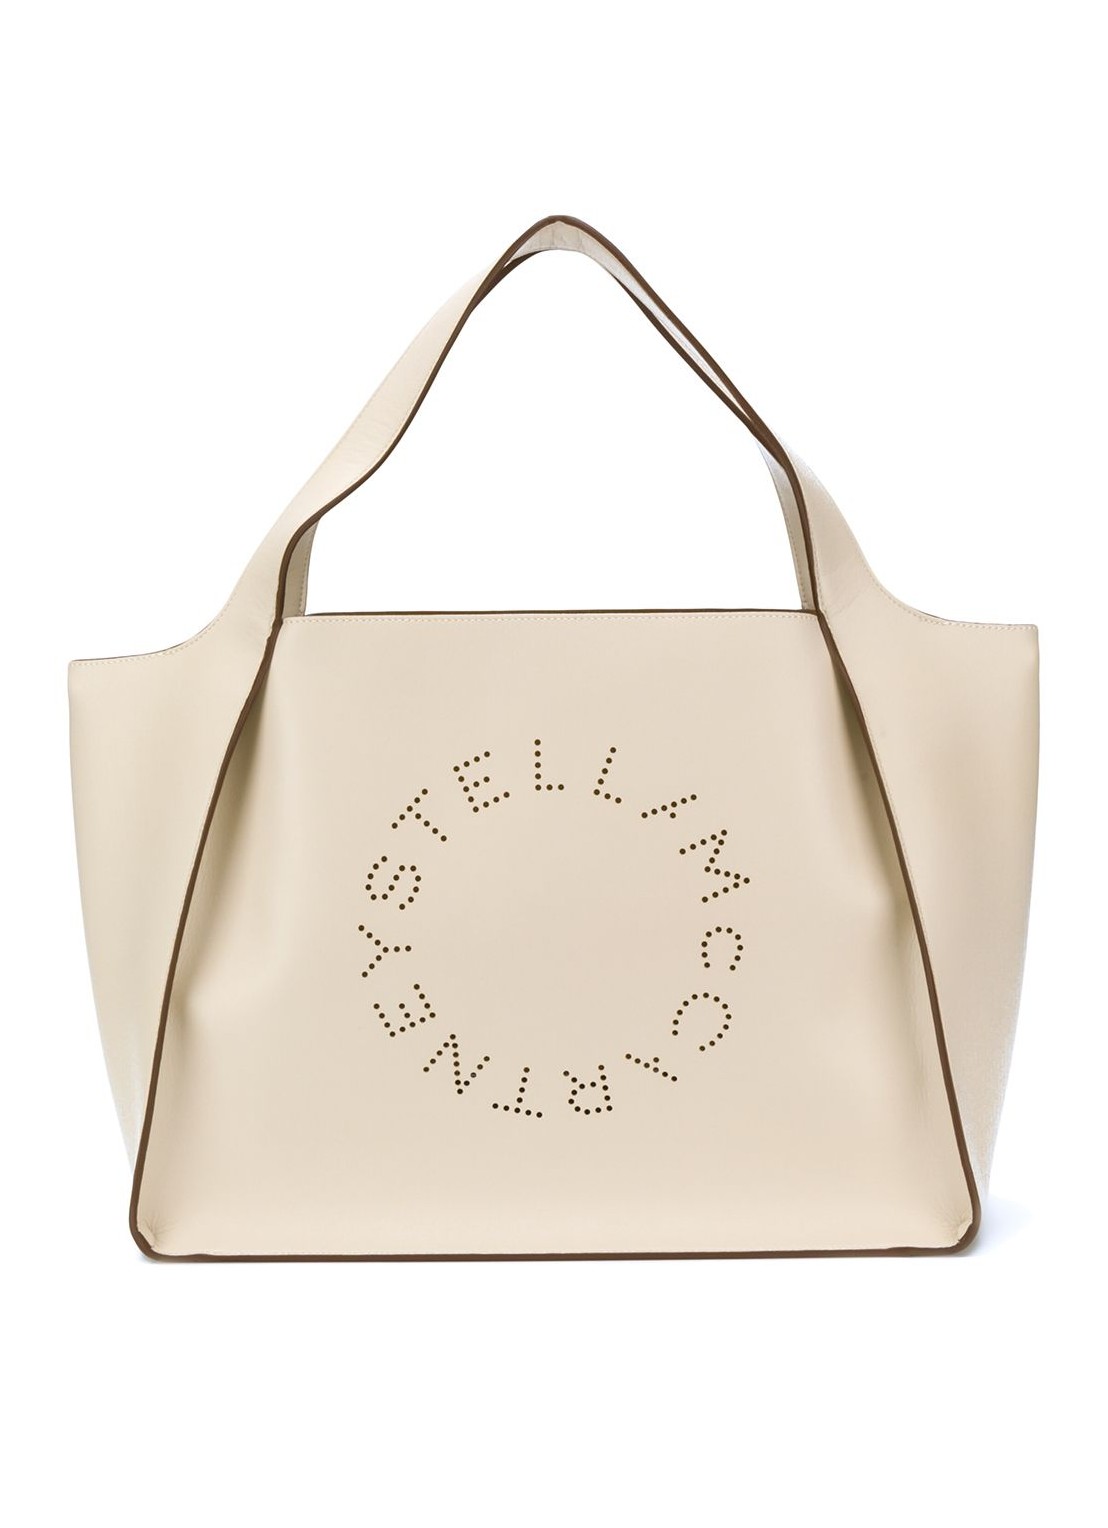 Handbag stella mccartney handbag woman tote eco soft 502793w8542 9000 talla blanco
 